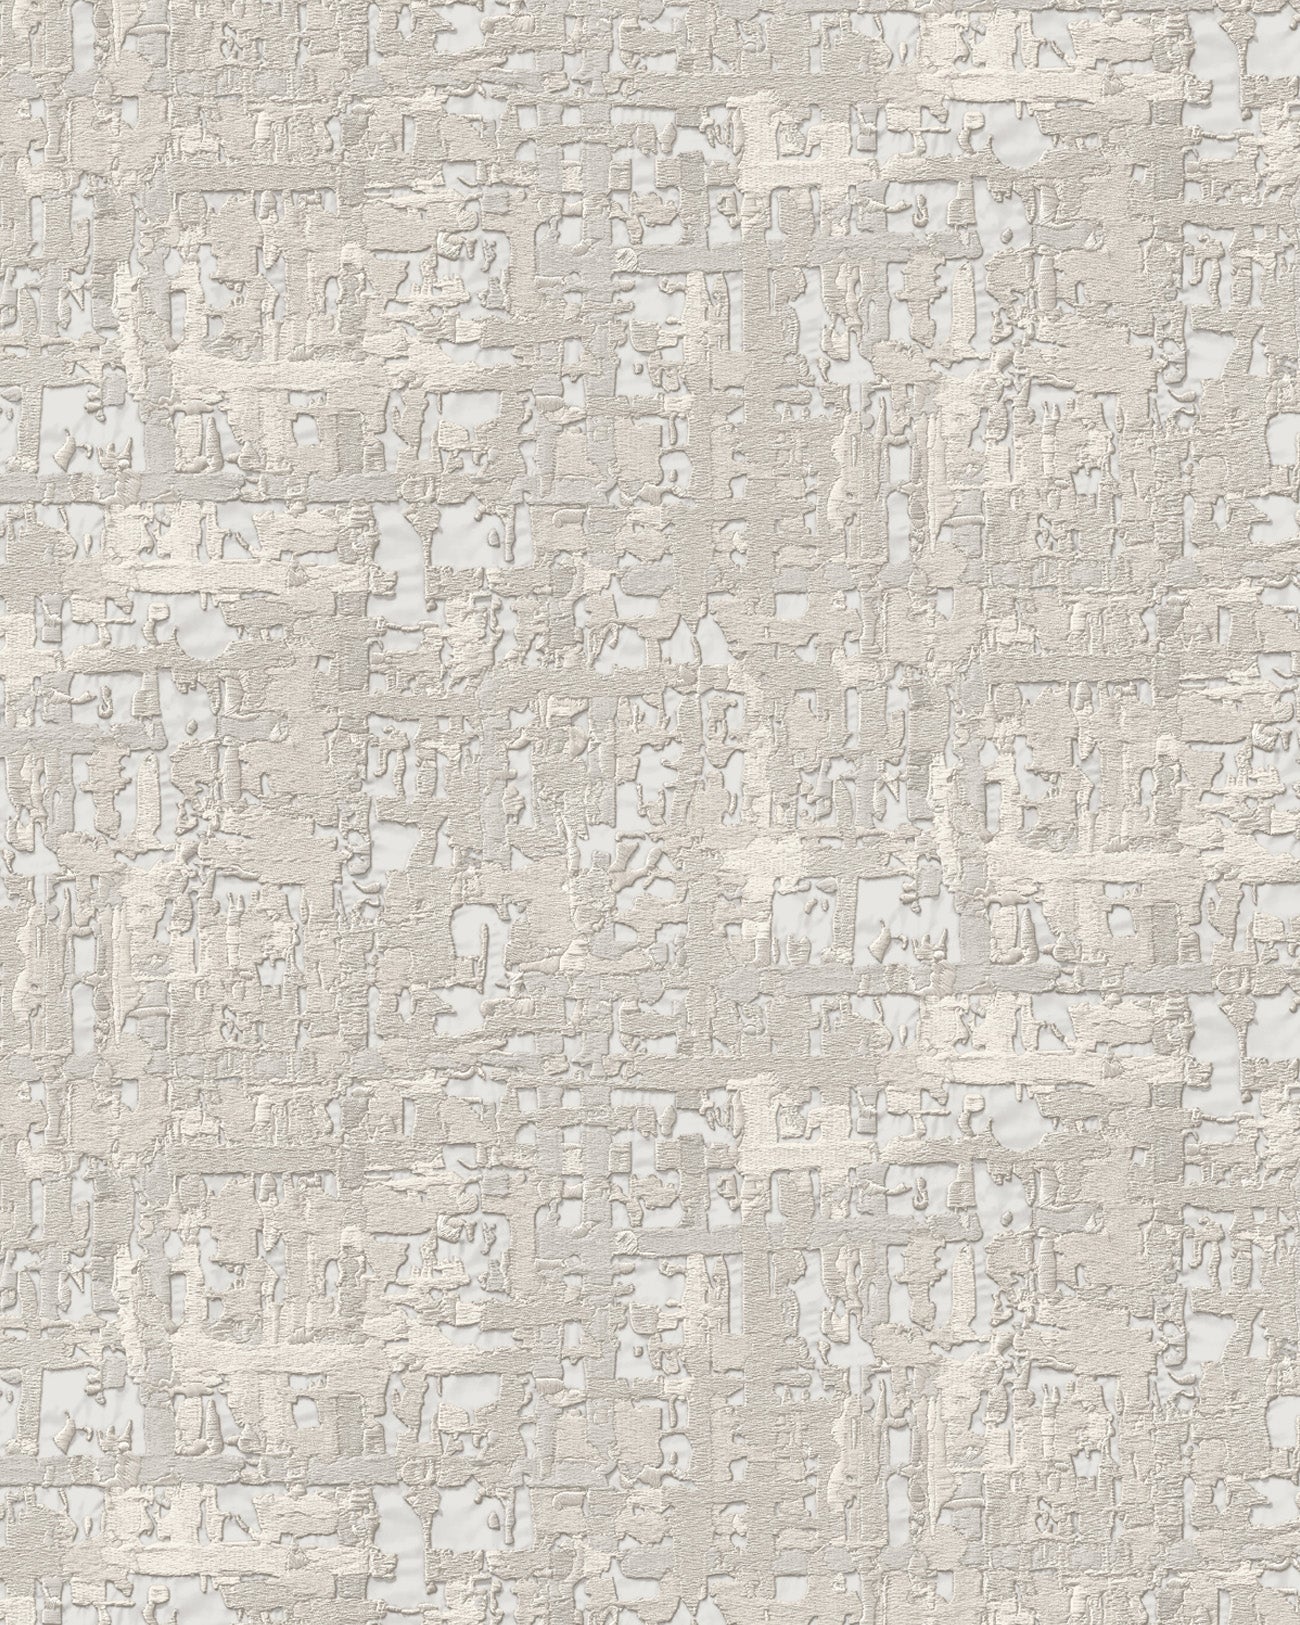 Tapete in Textiloptik Profhome DE120092-DI Heißgeprägte Vliestapete mit Satin-Textiloptik Weiß Hellgrau 5,33 m²